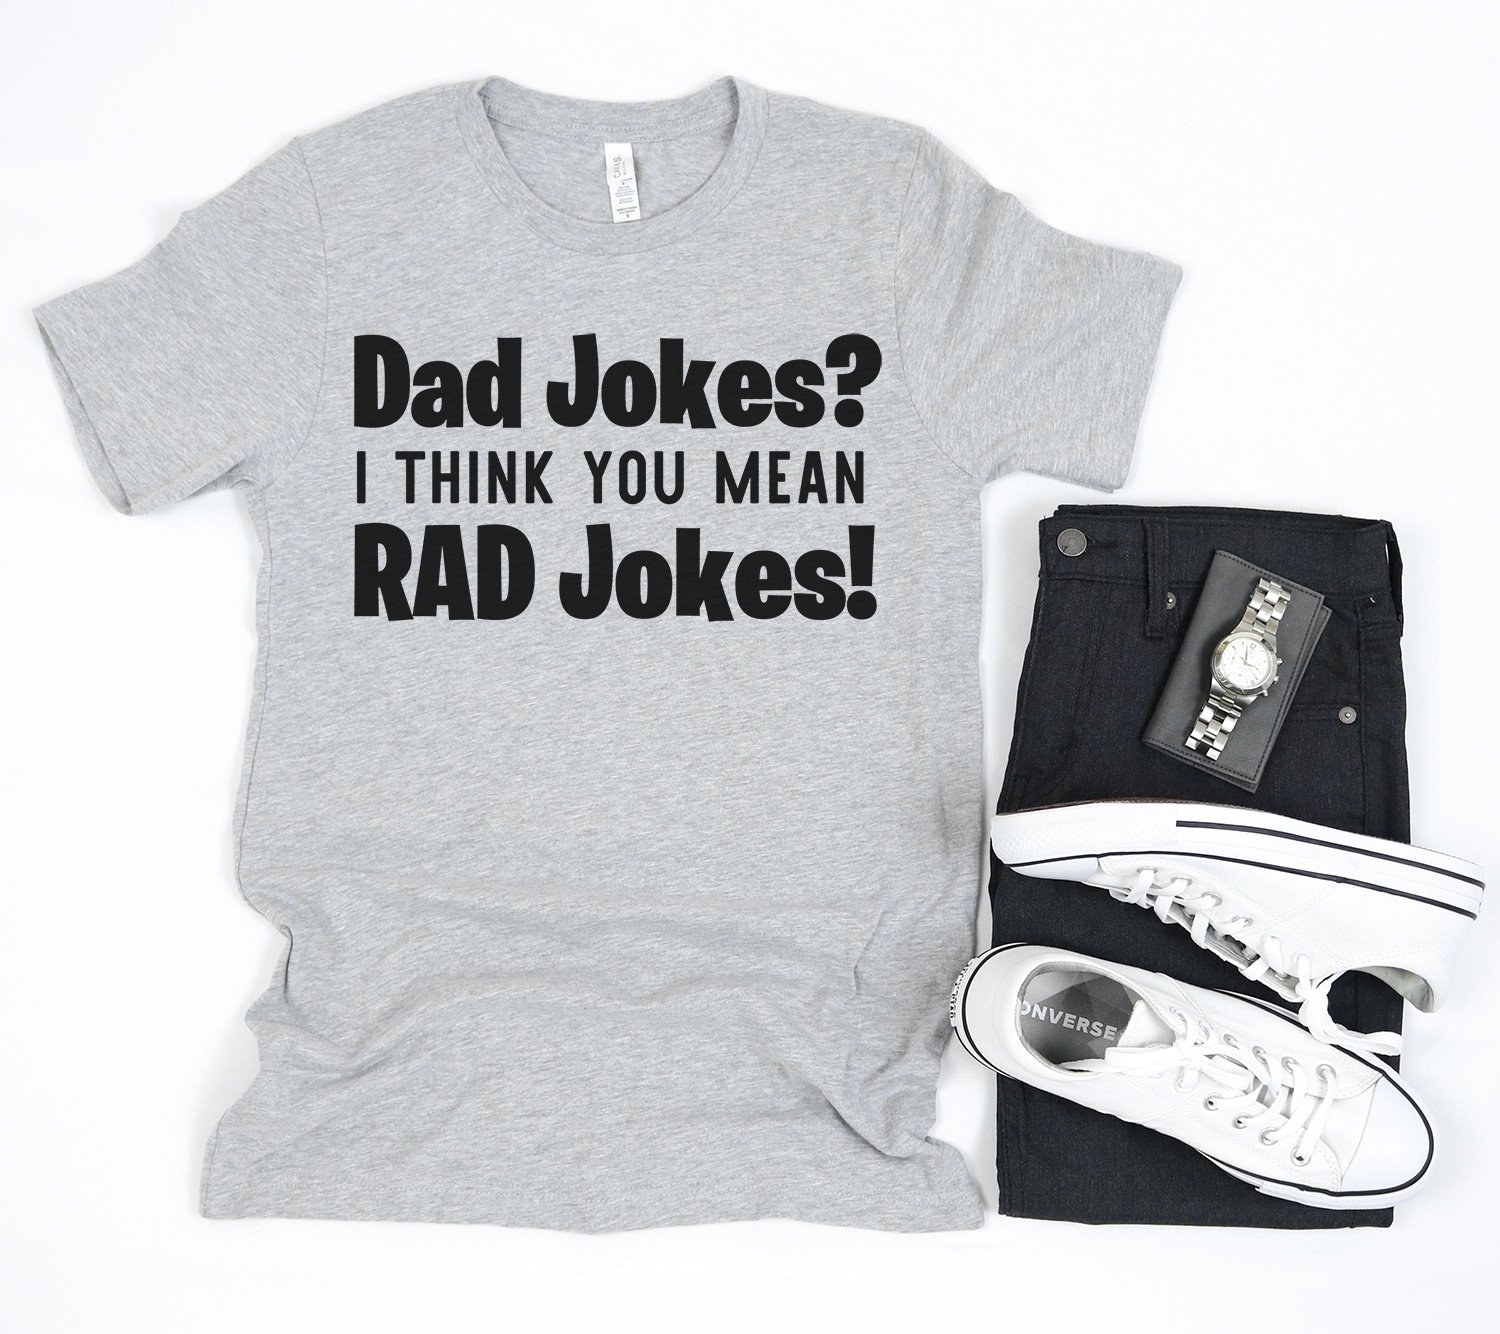 "Dad Jokes? I Think You Mean RAD Jokes!" on grey mens shirt